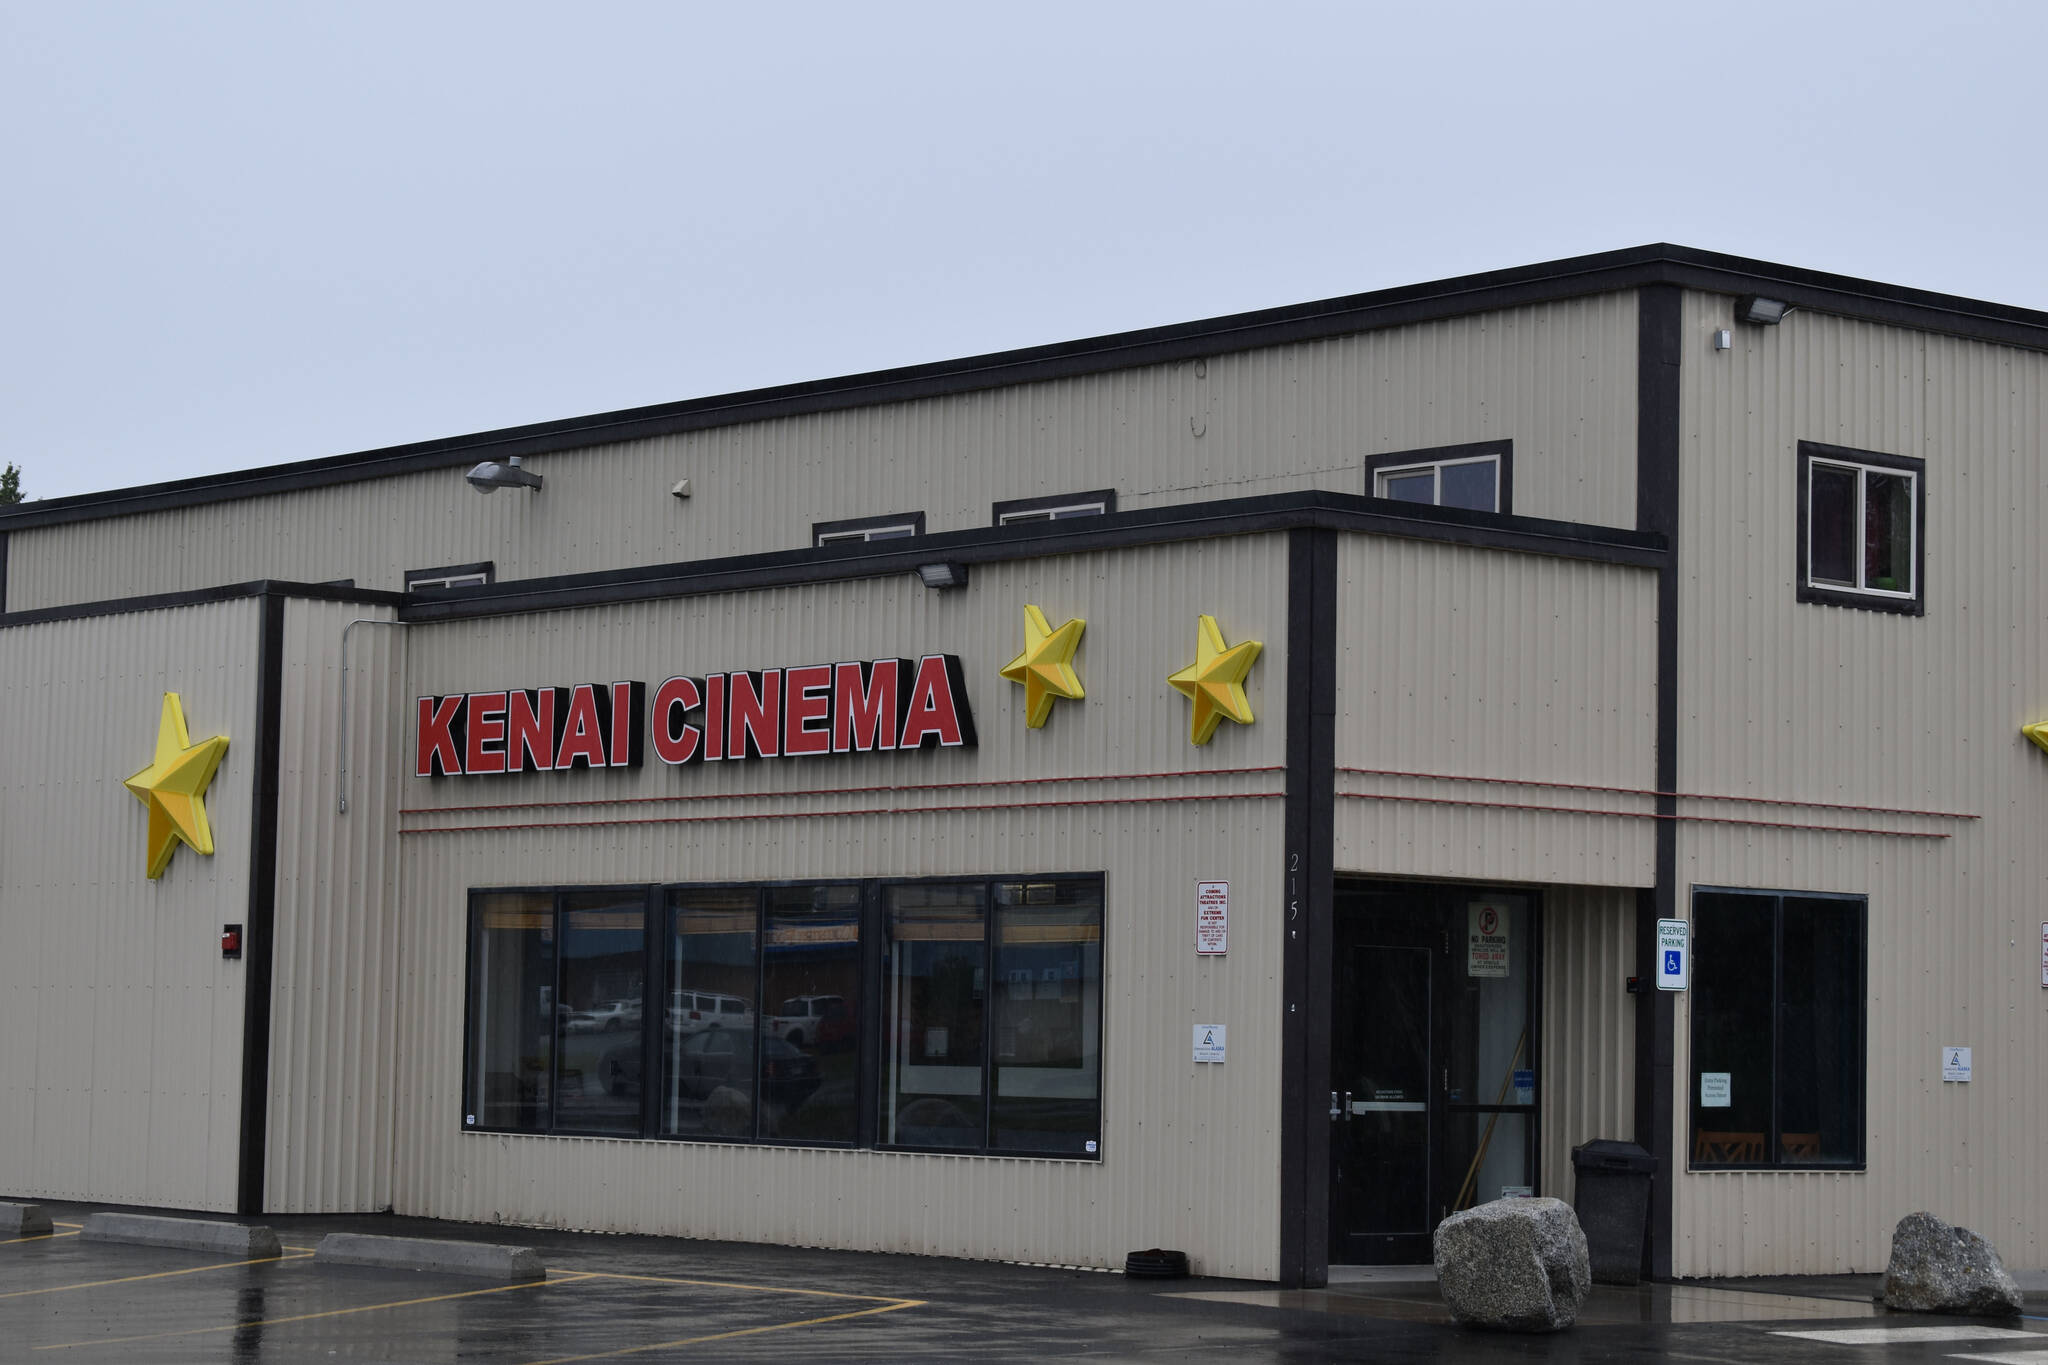 The Kenai Cinema on Wednesday, Aug. 31, 2022, in Kenai, Alaska. (Jake Dye/Peninsula Clarion)